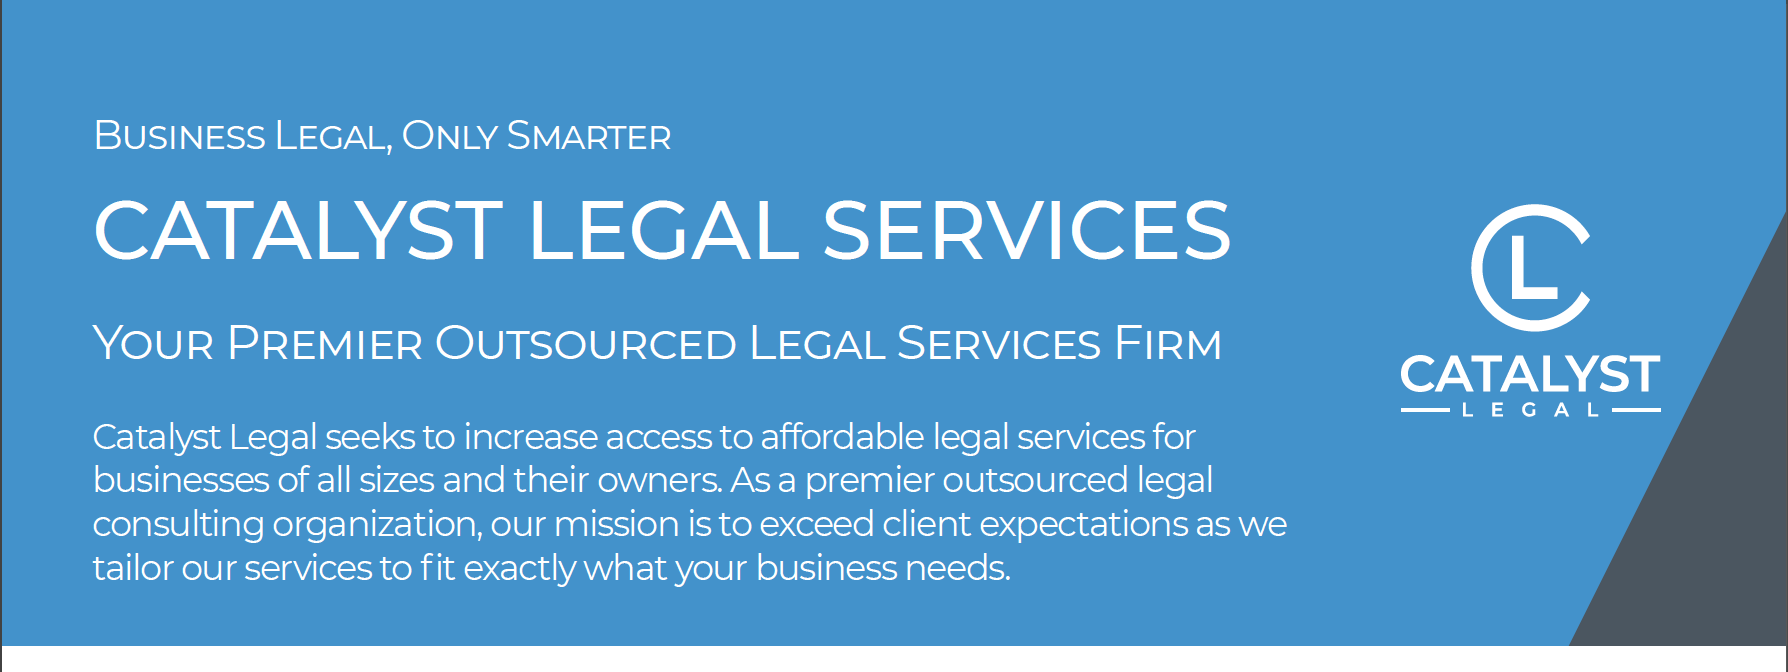 Catalyst Legal Services Values